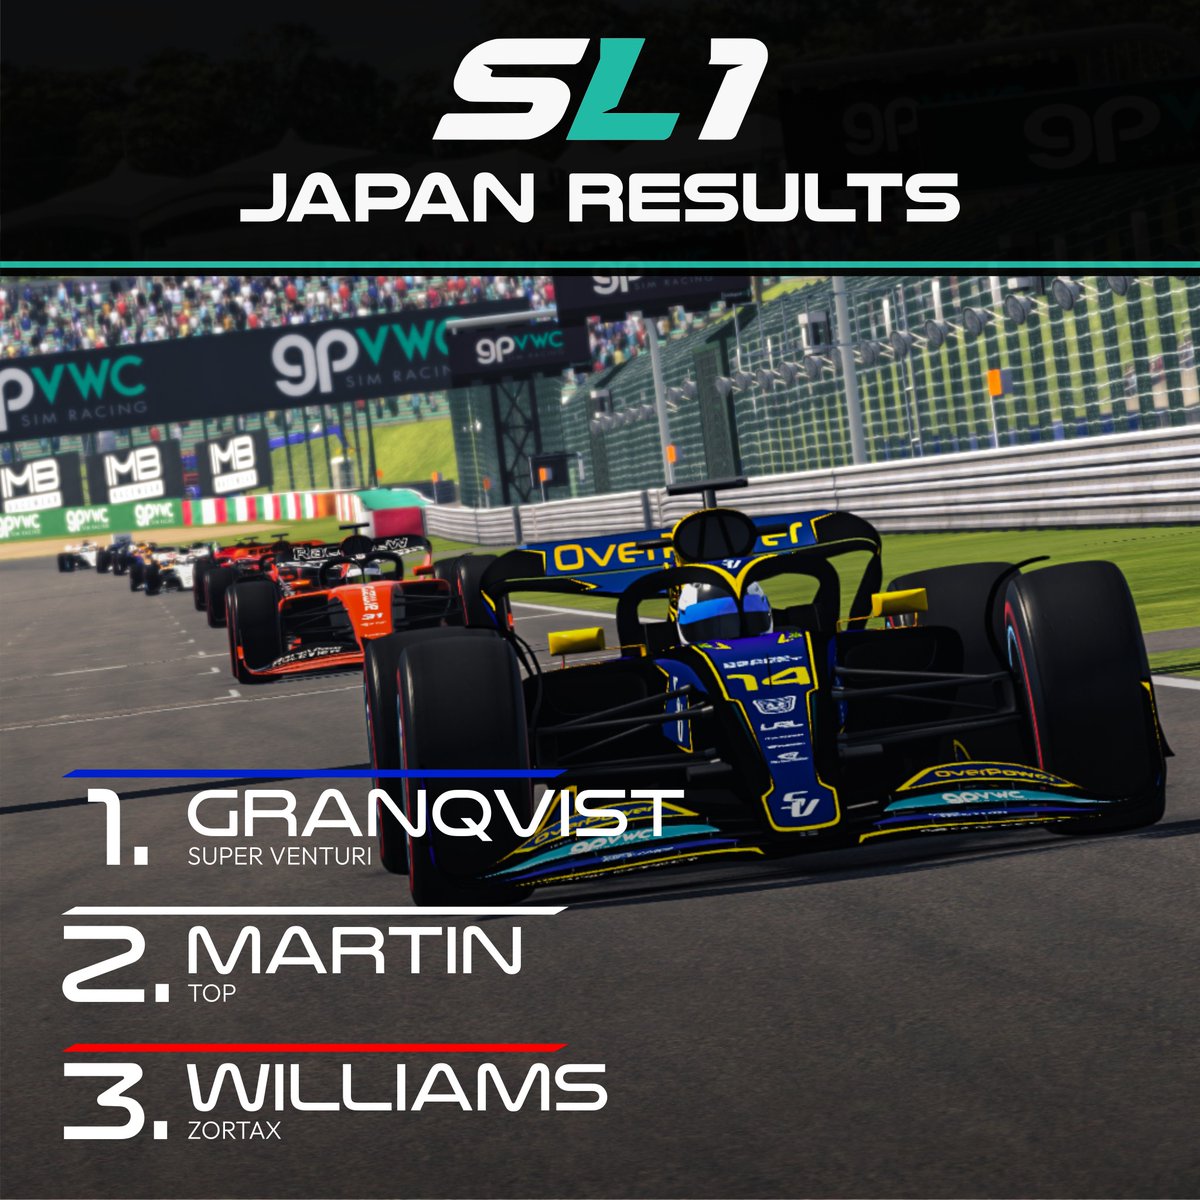 Granqvist claims yet another victory!

#gpvwc #saudiarabiangp #simracing #esports #SL1
#rfactor2 #f1 #f2 #f3 #racing